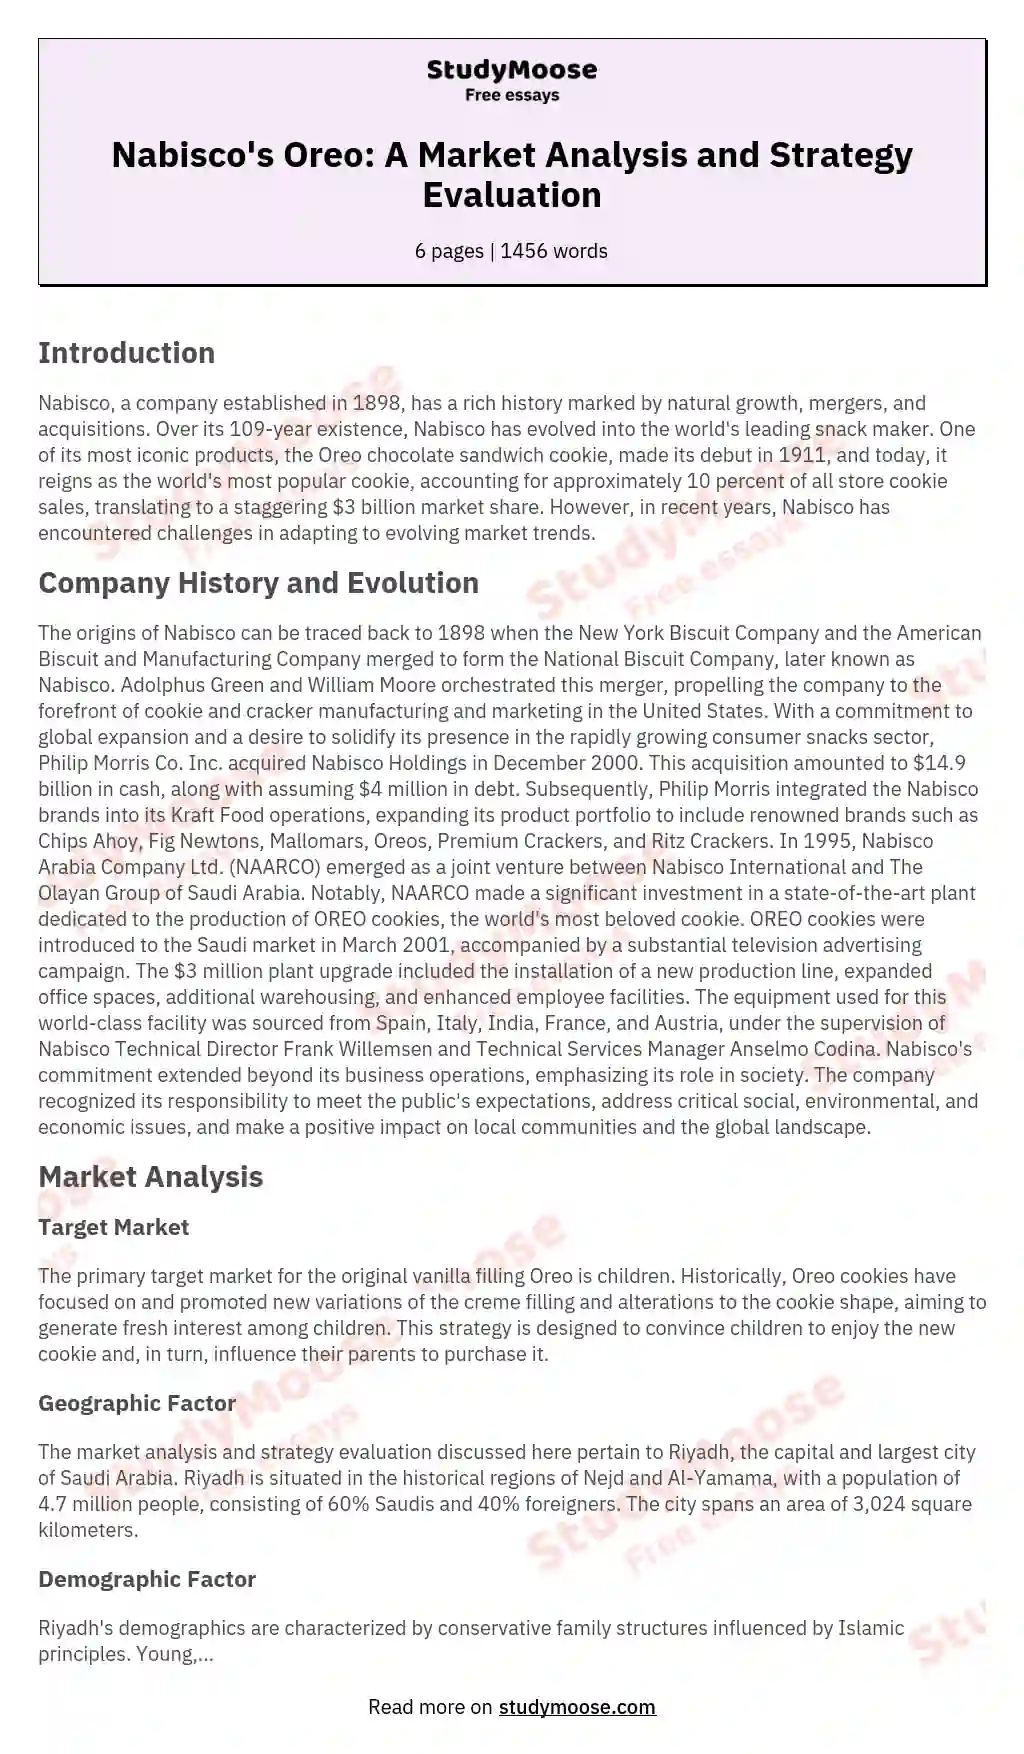 Nabisco's Oreo: A Market Analysis and Strategy Evaluation essay